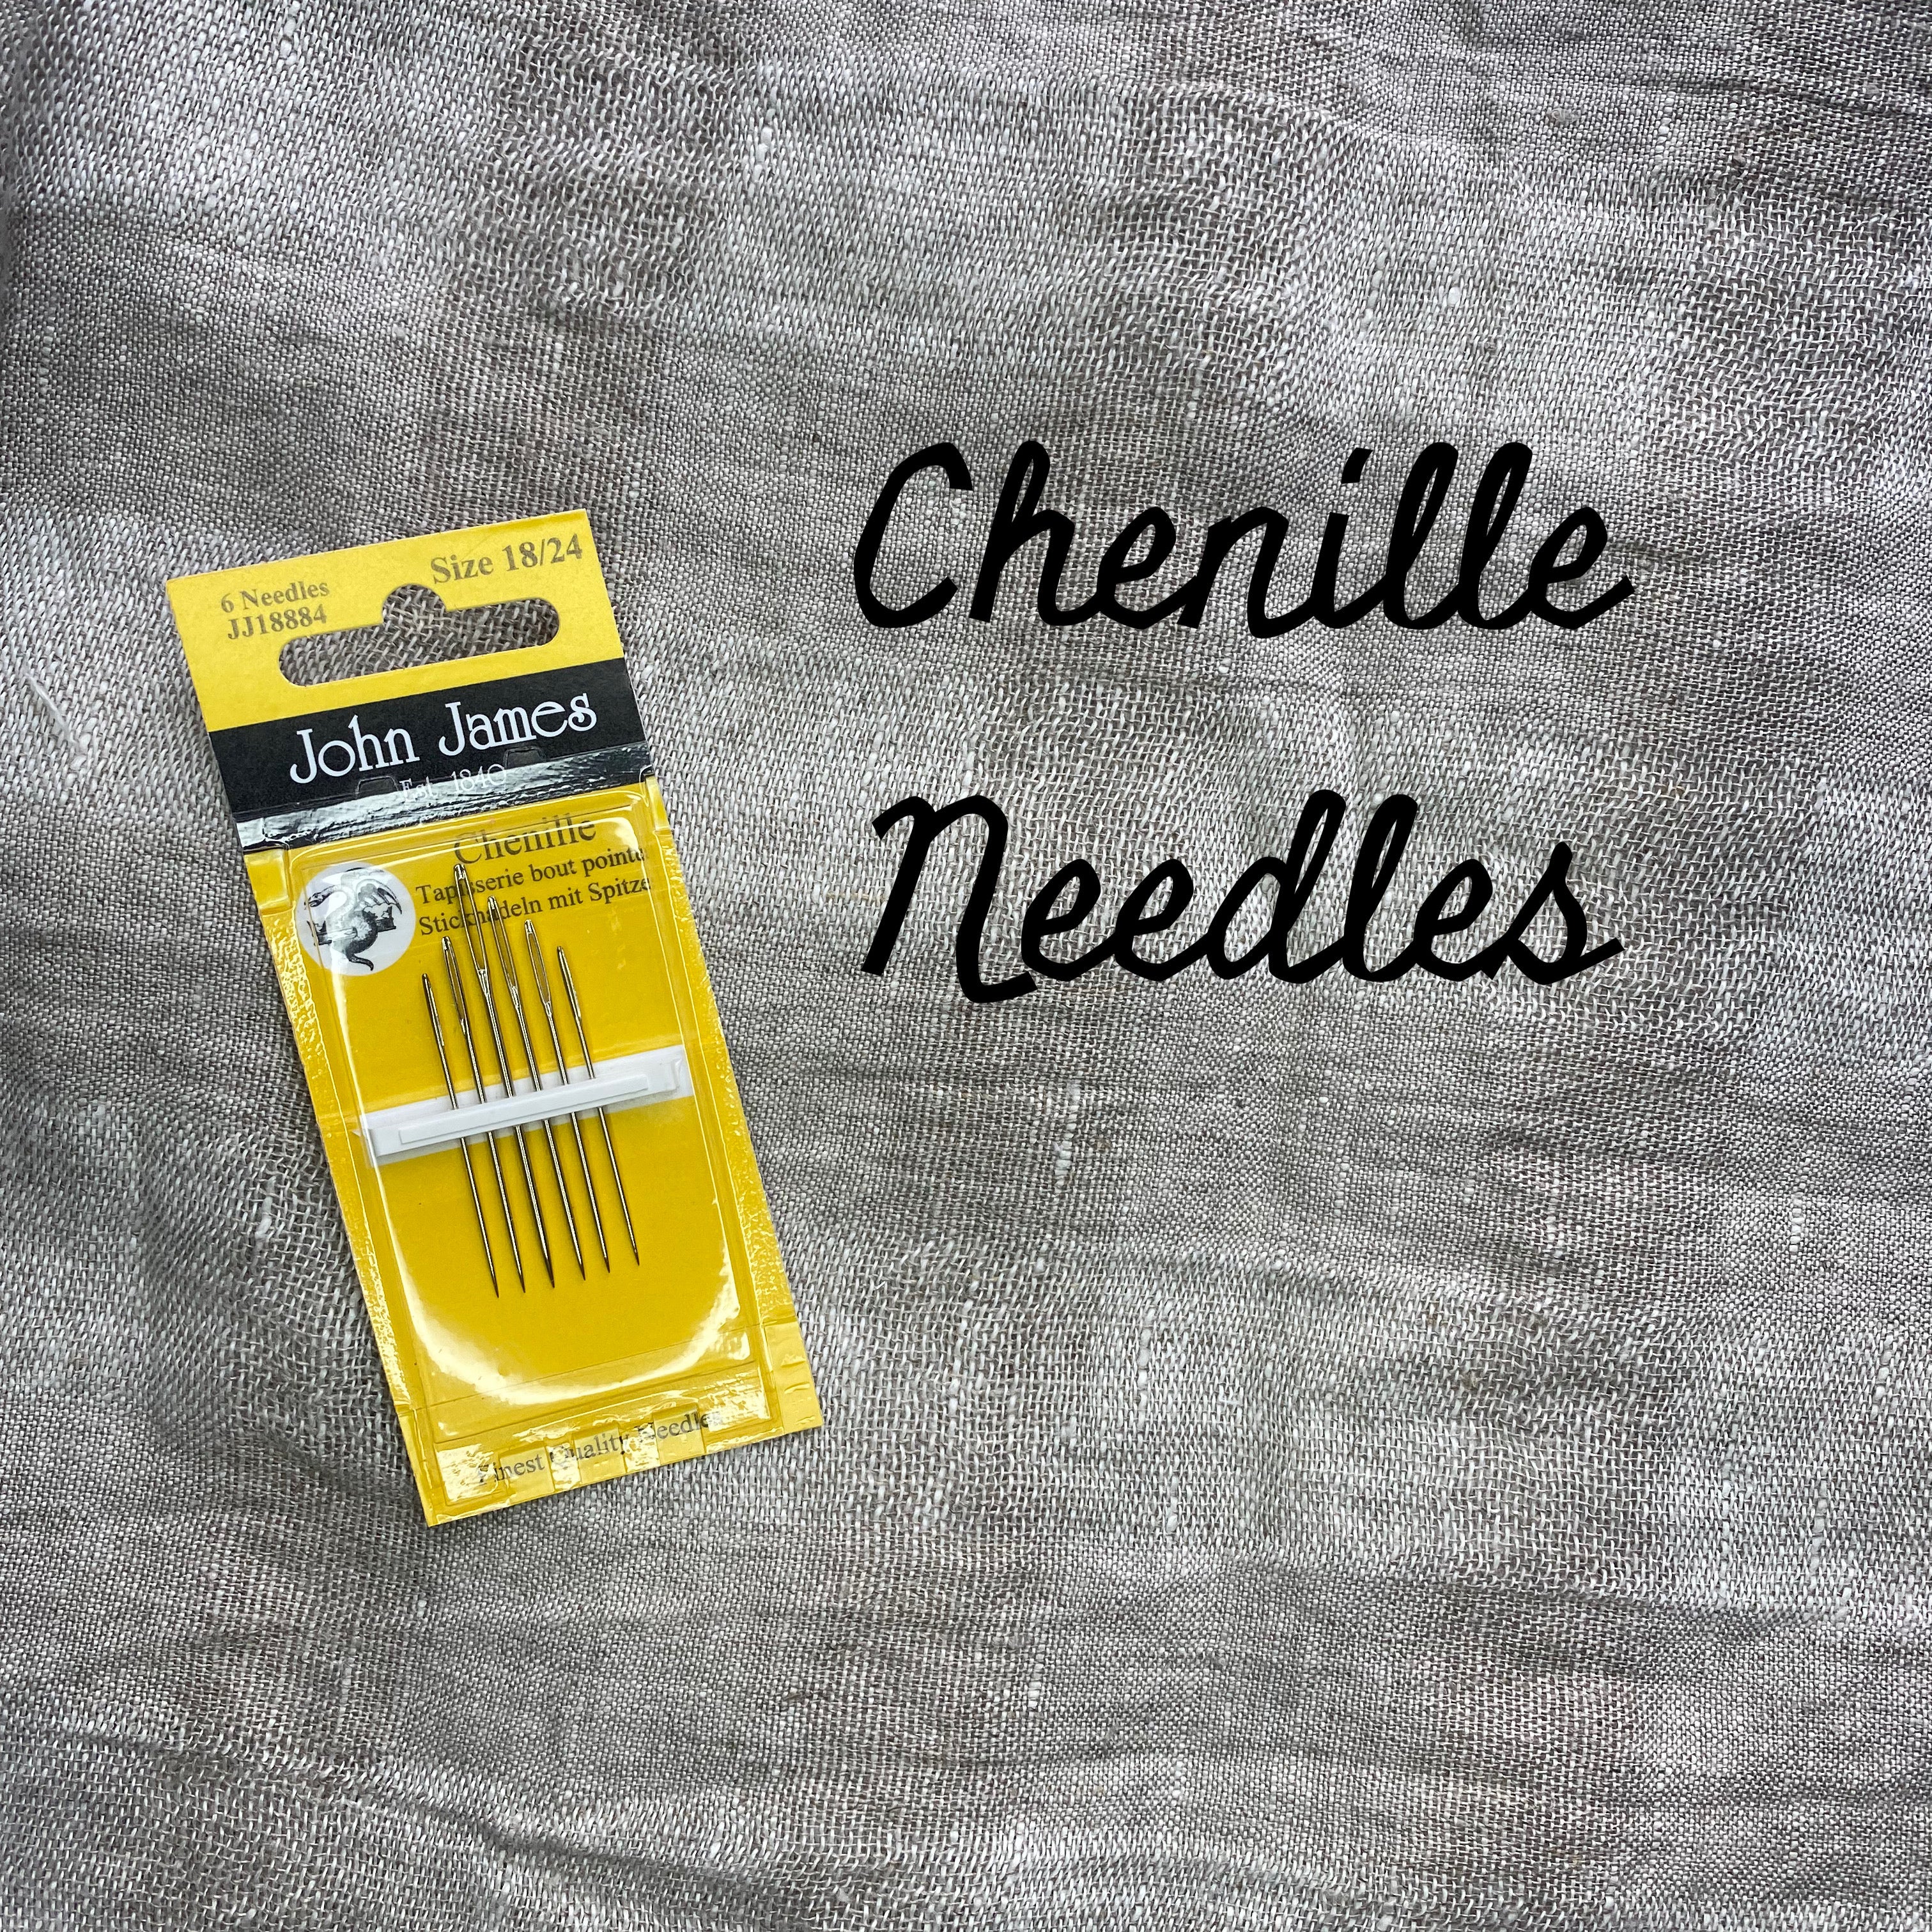 Chenille Needles Size 18